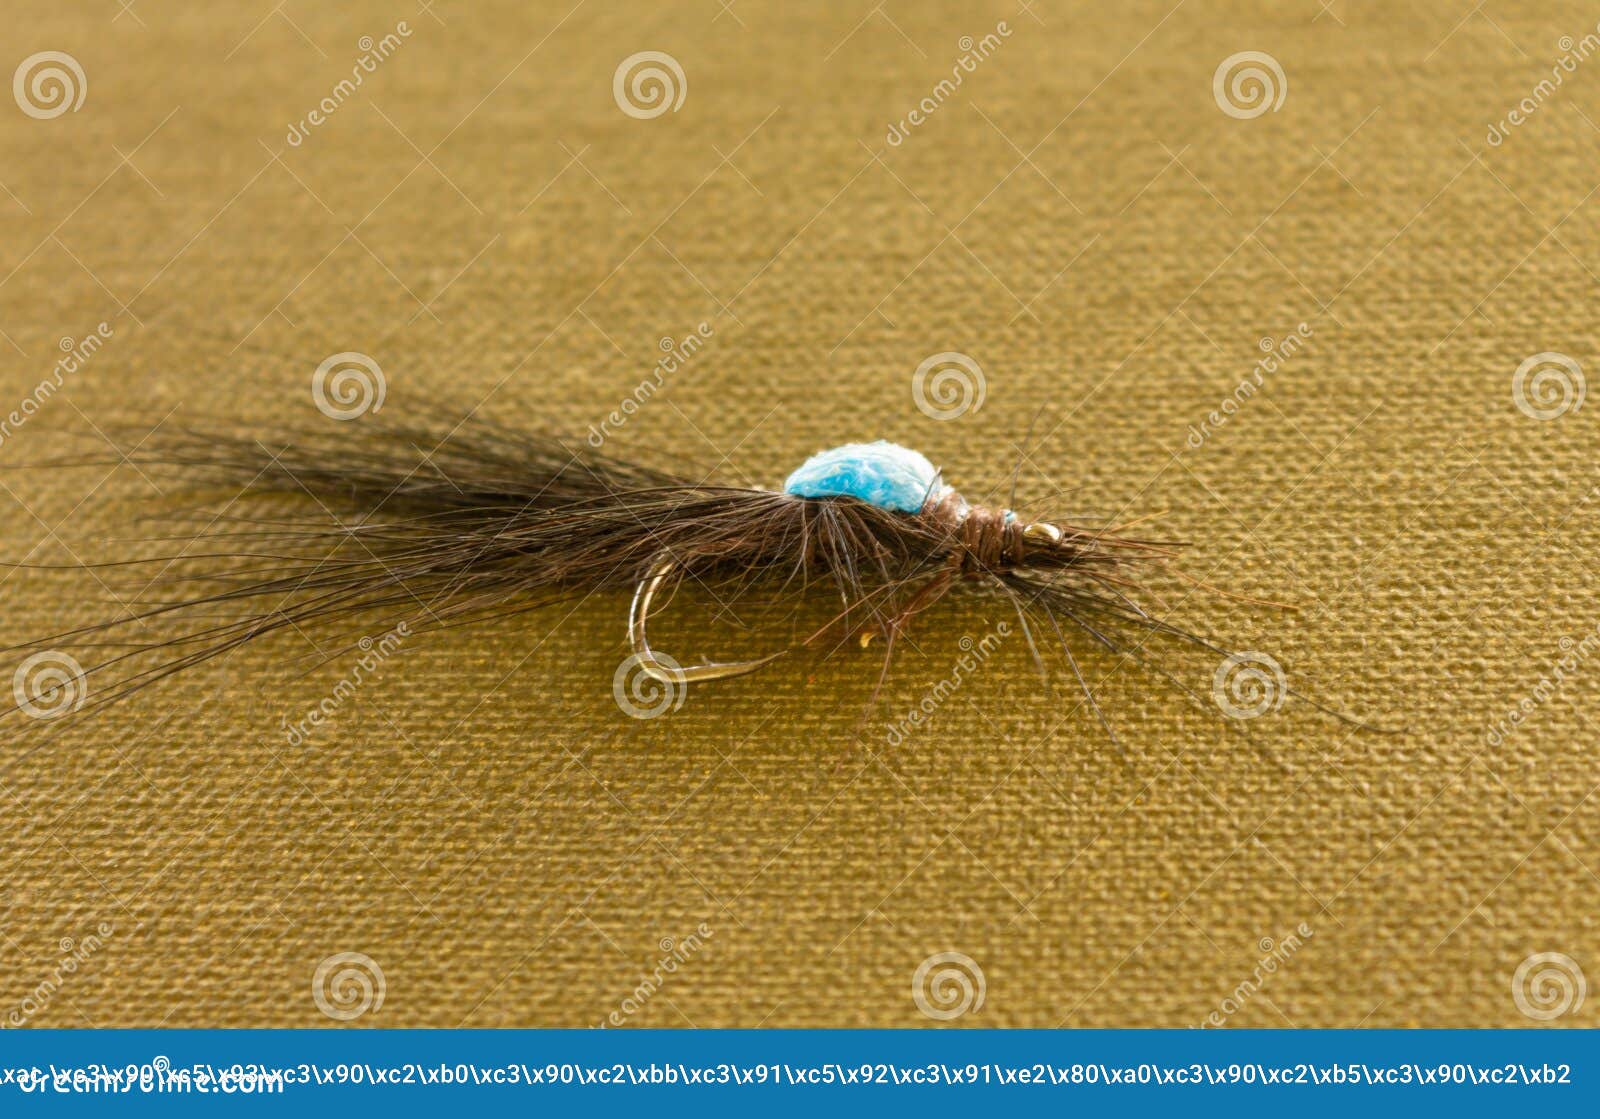 Tied Flies, Bait for Outdoor Activities, Fly Fishing. Do-it